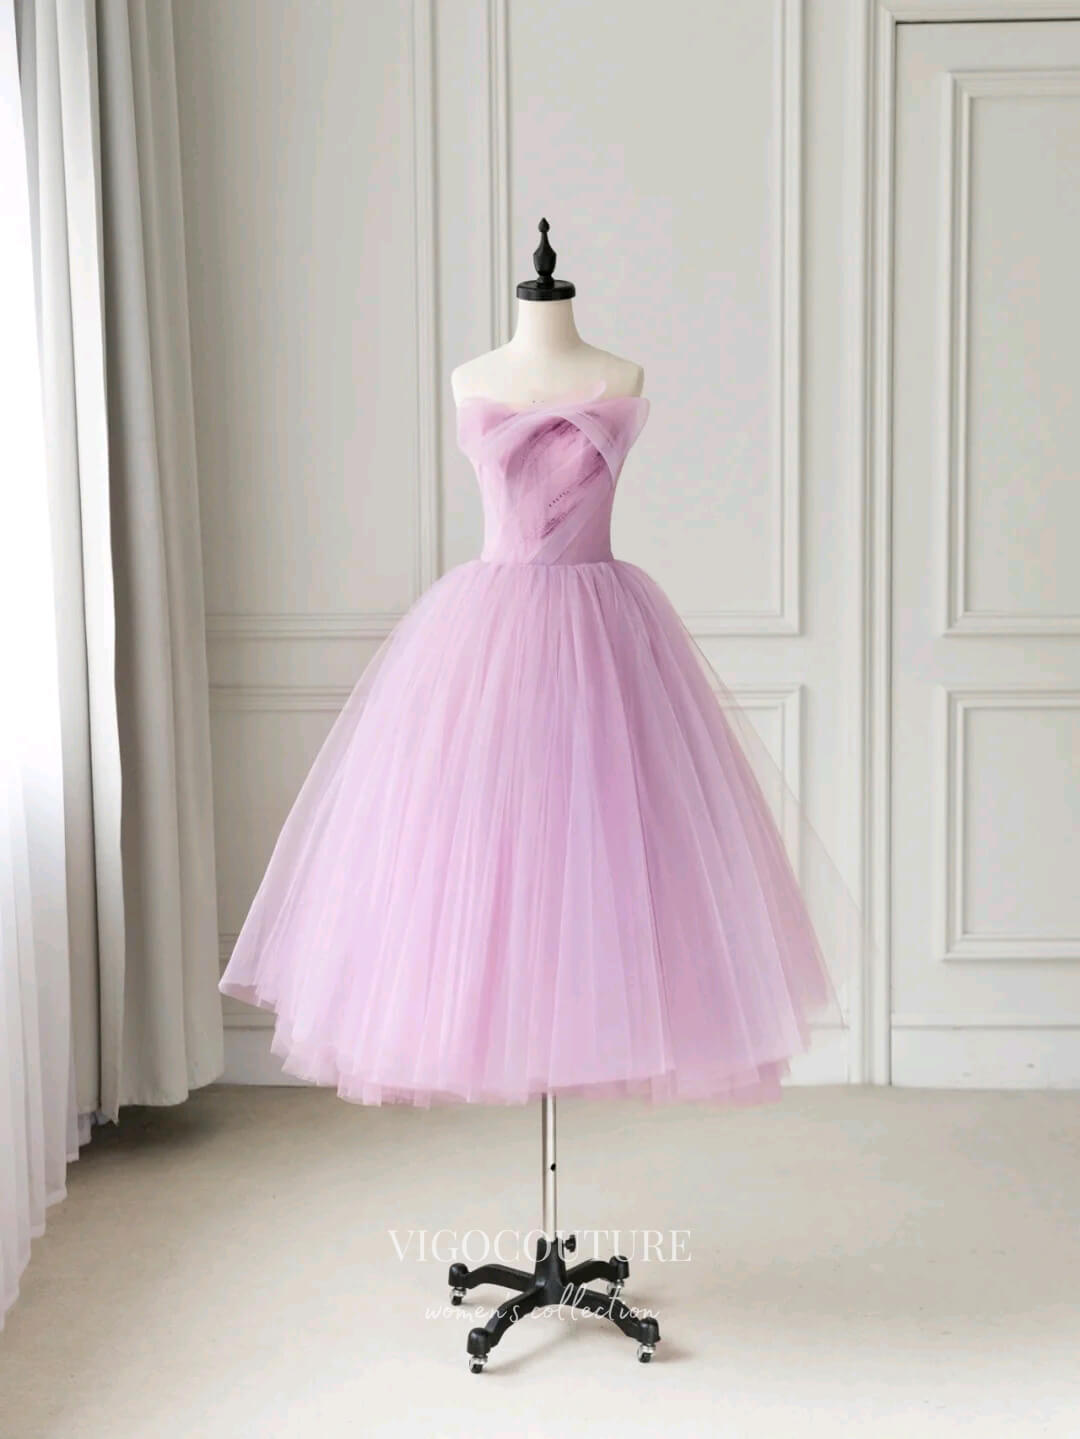 vigocouture-Lilac Strapless Homecoming Dresses Beaded Prom Dresses 21169-Prom Dresses-vigocouture-Lilac-US2-